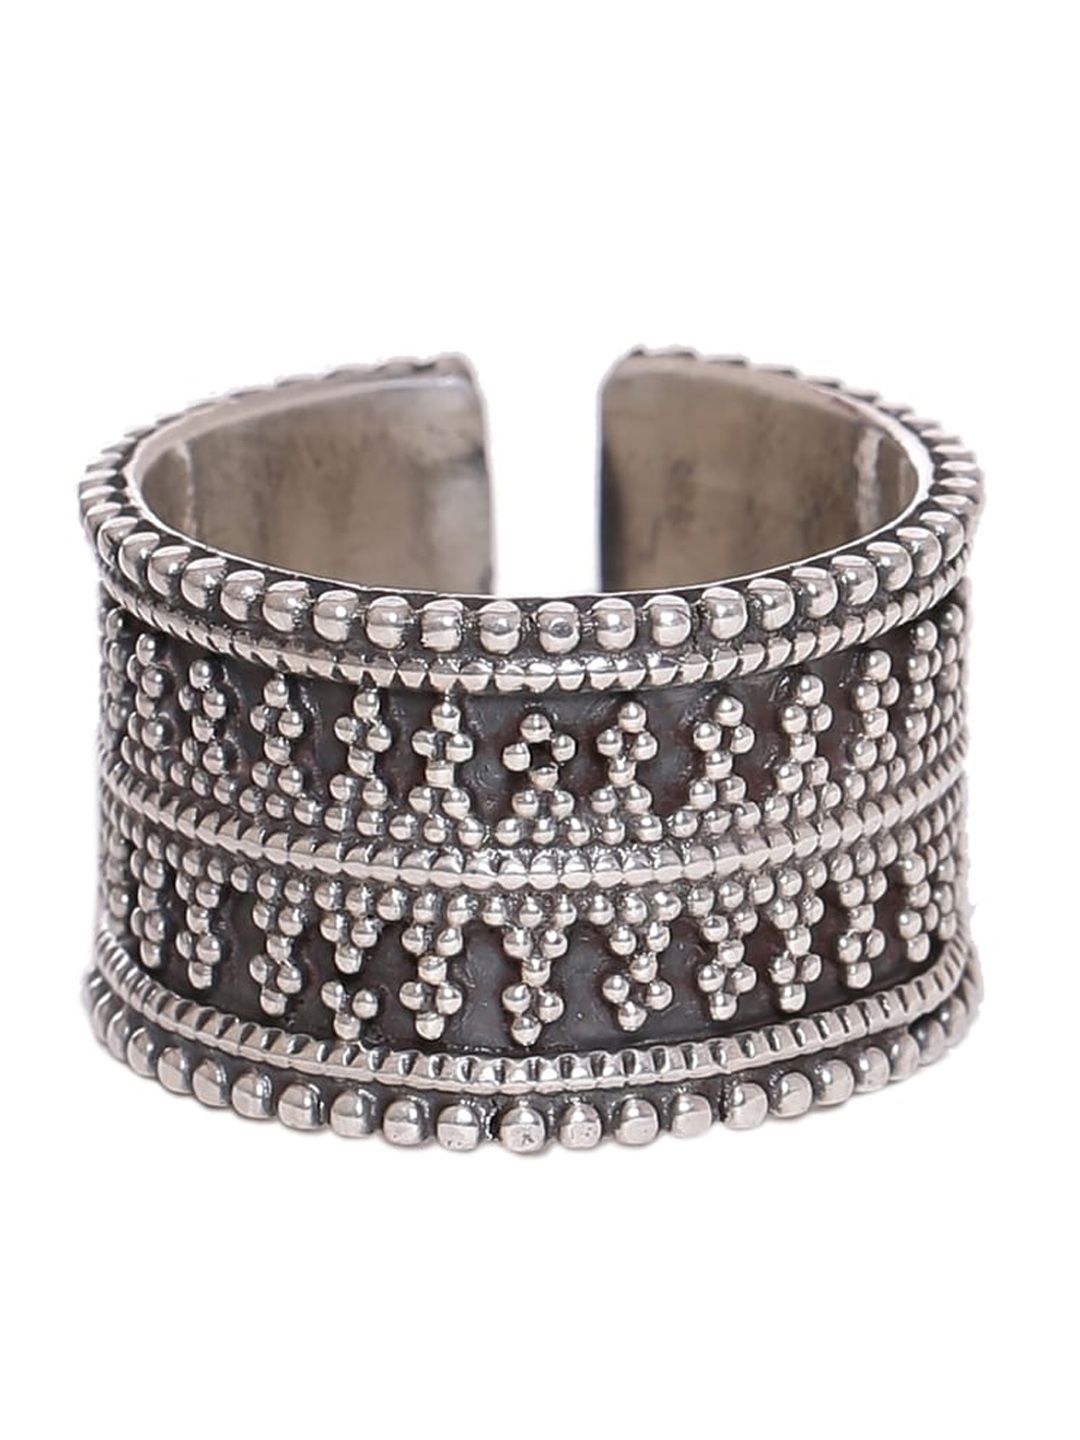 ADORN by Nikita Ladiwala Silver-Toned Geometric Design Finger Ring Price in India